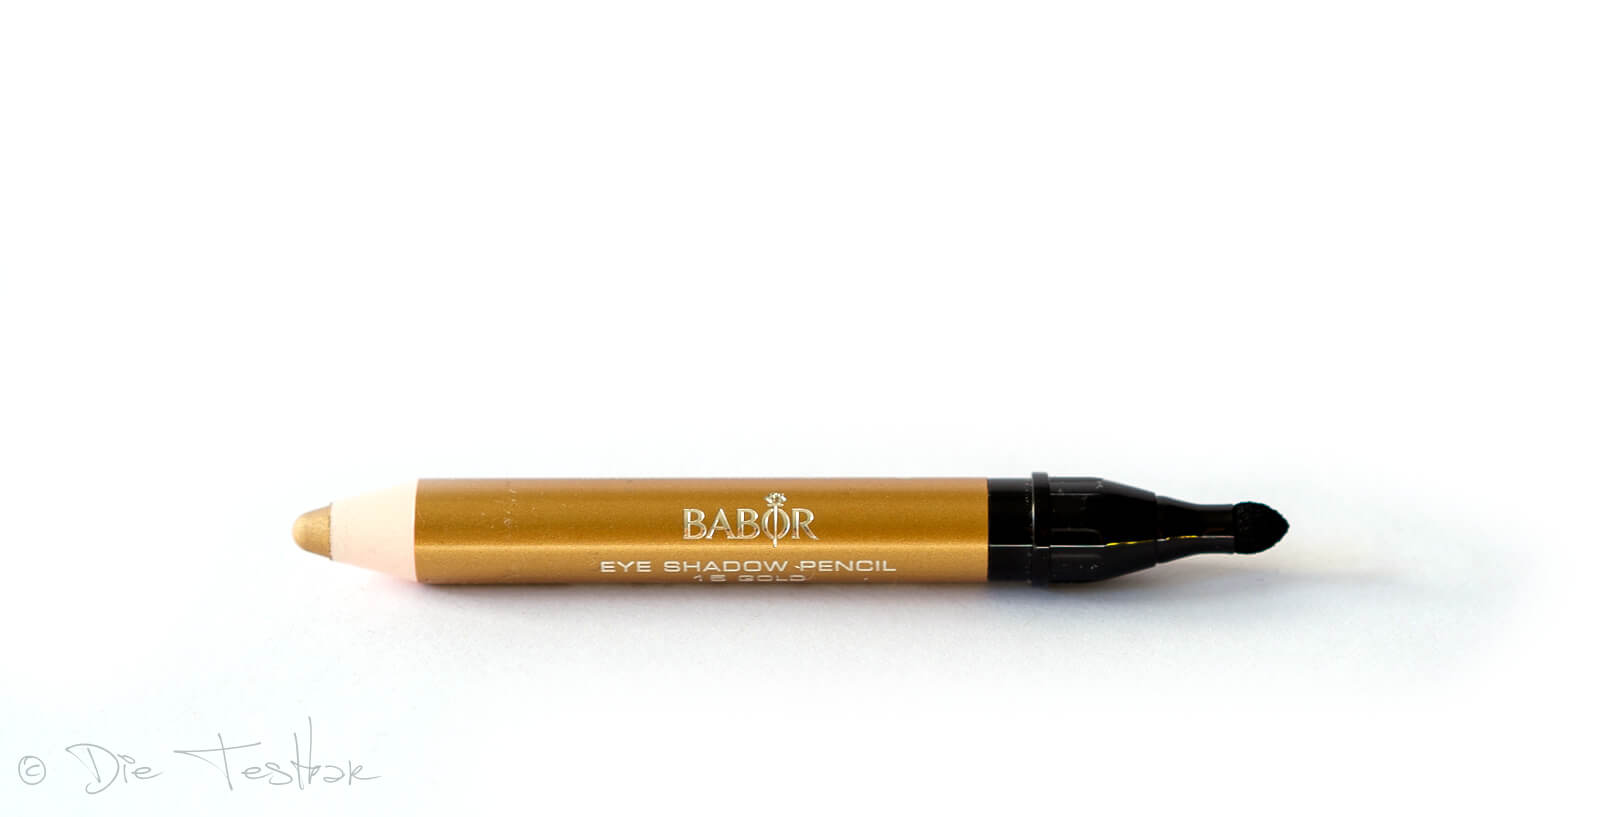 BABOR Eye Shadow Pencil in Gold